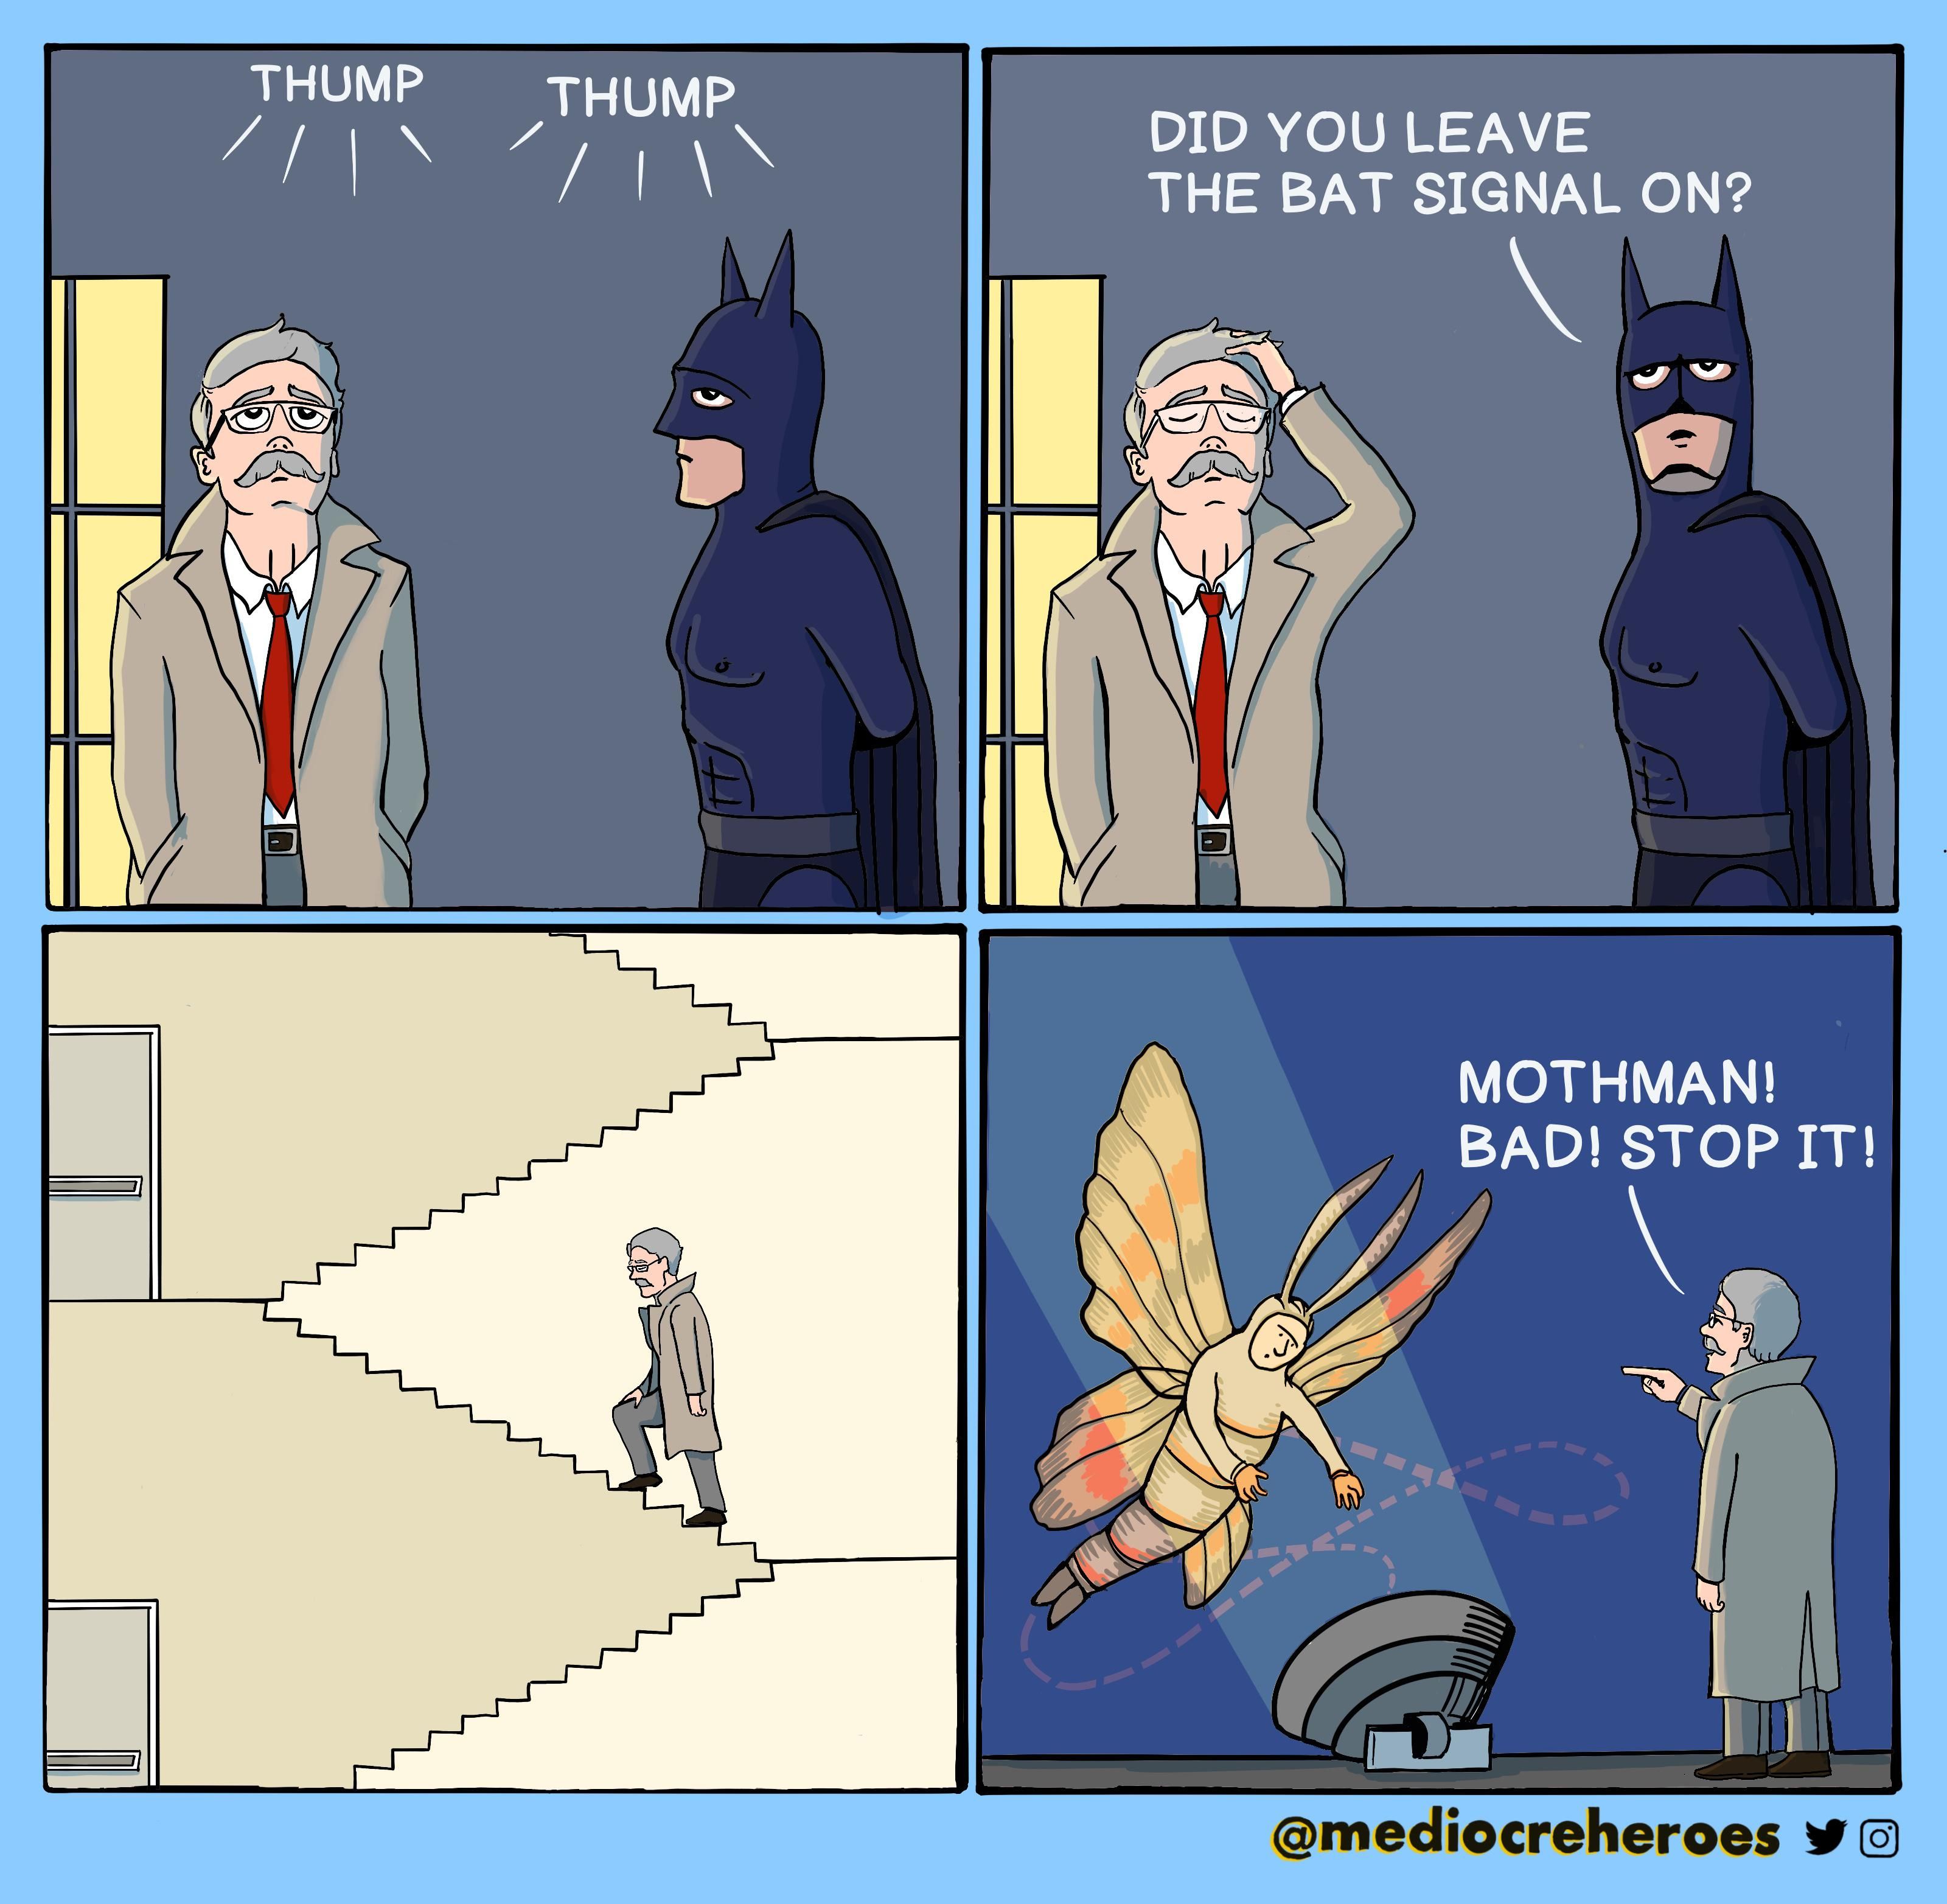 Bat signal.